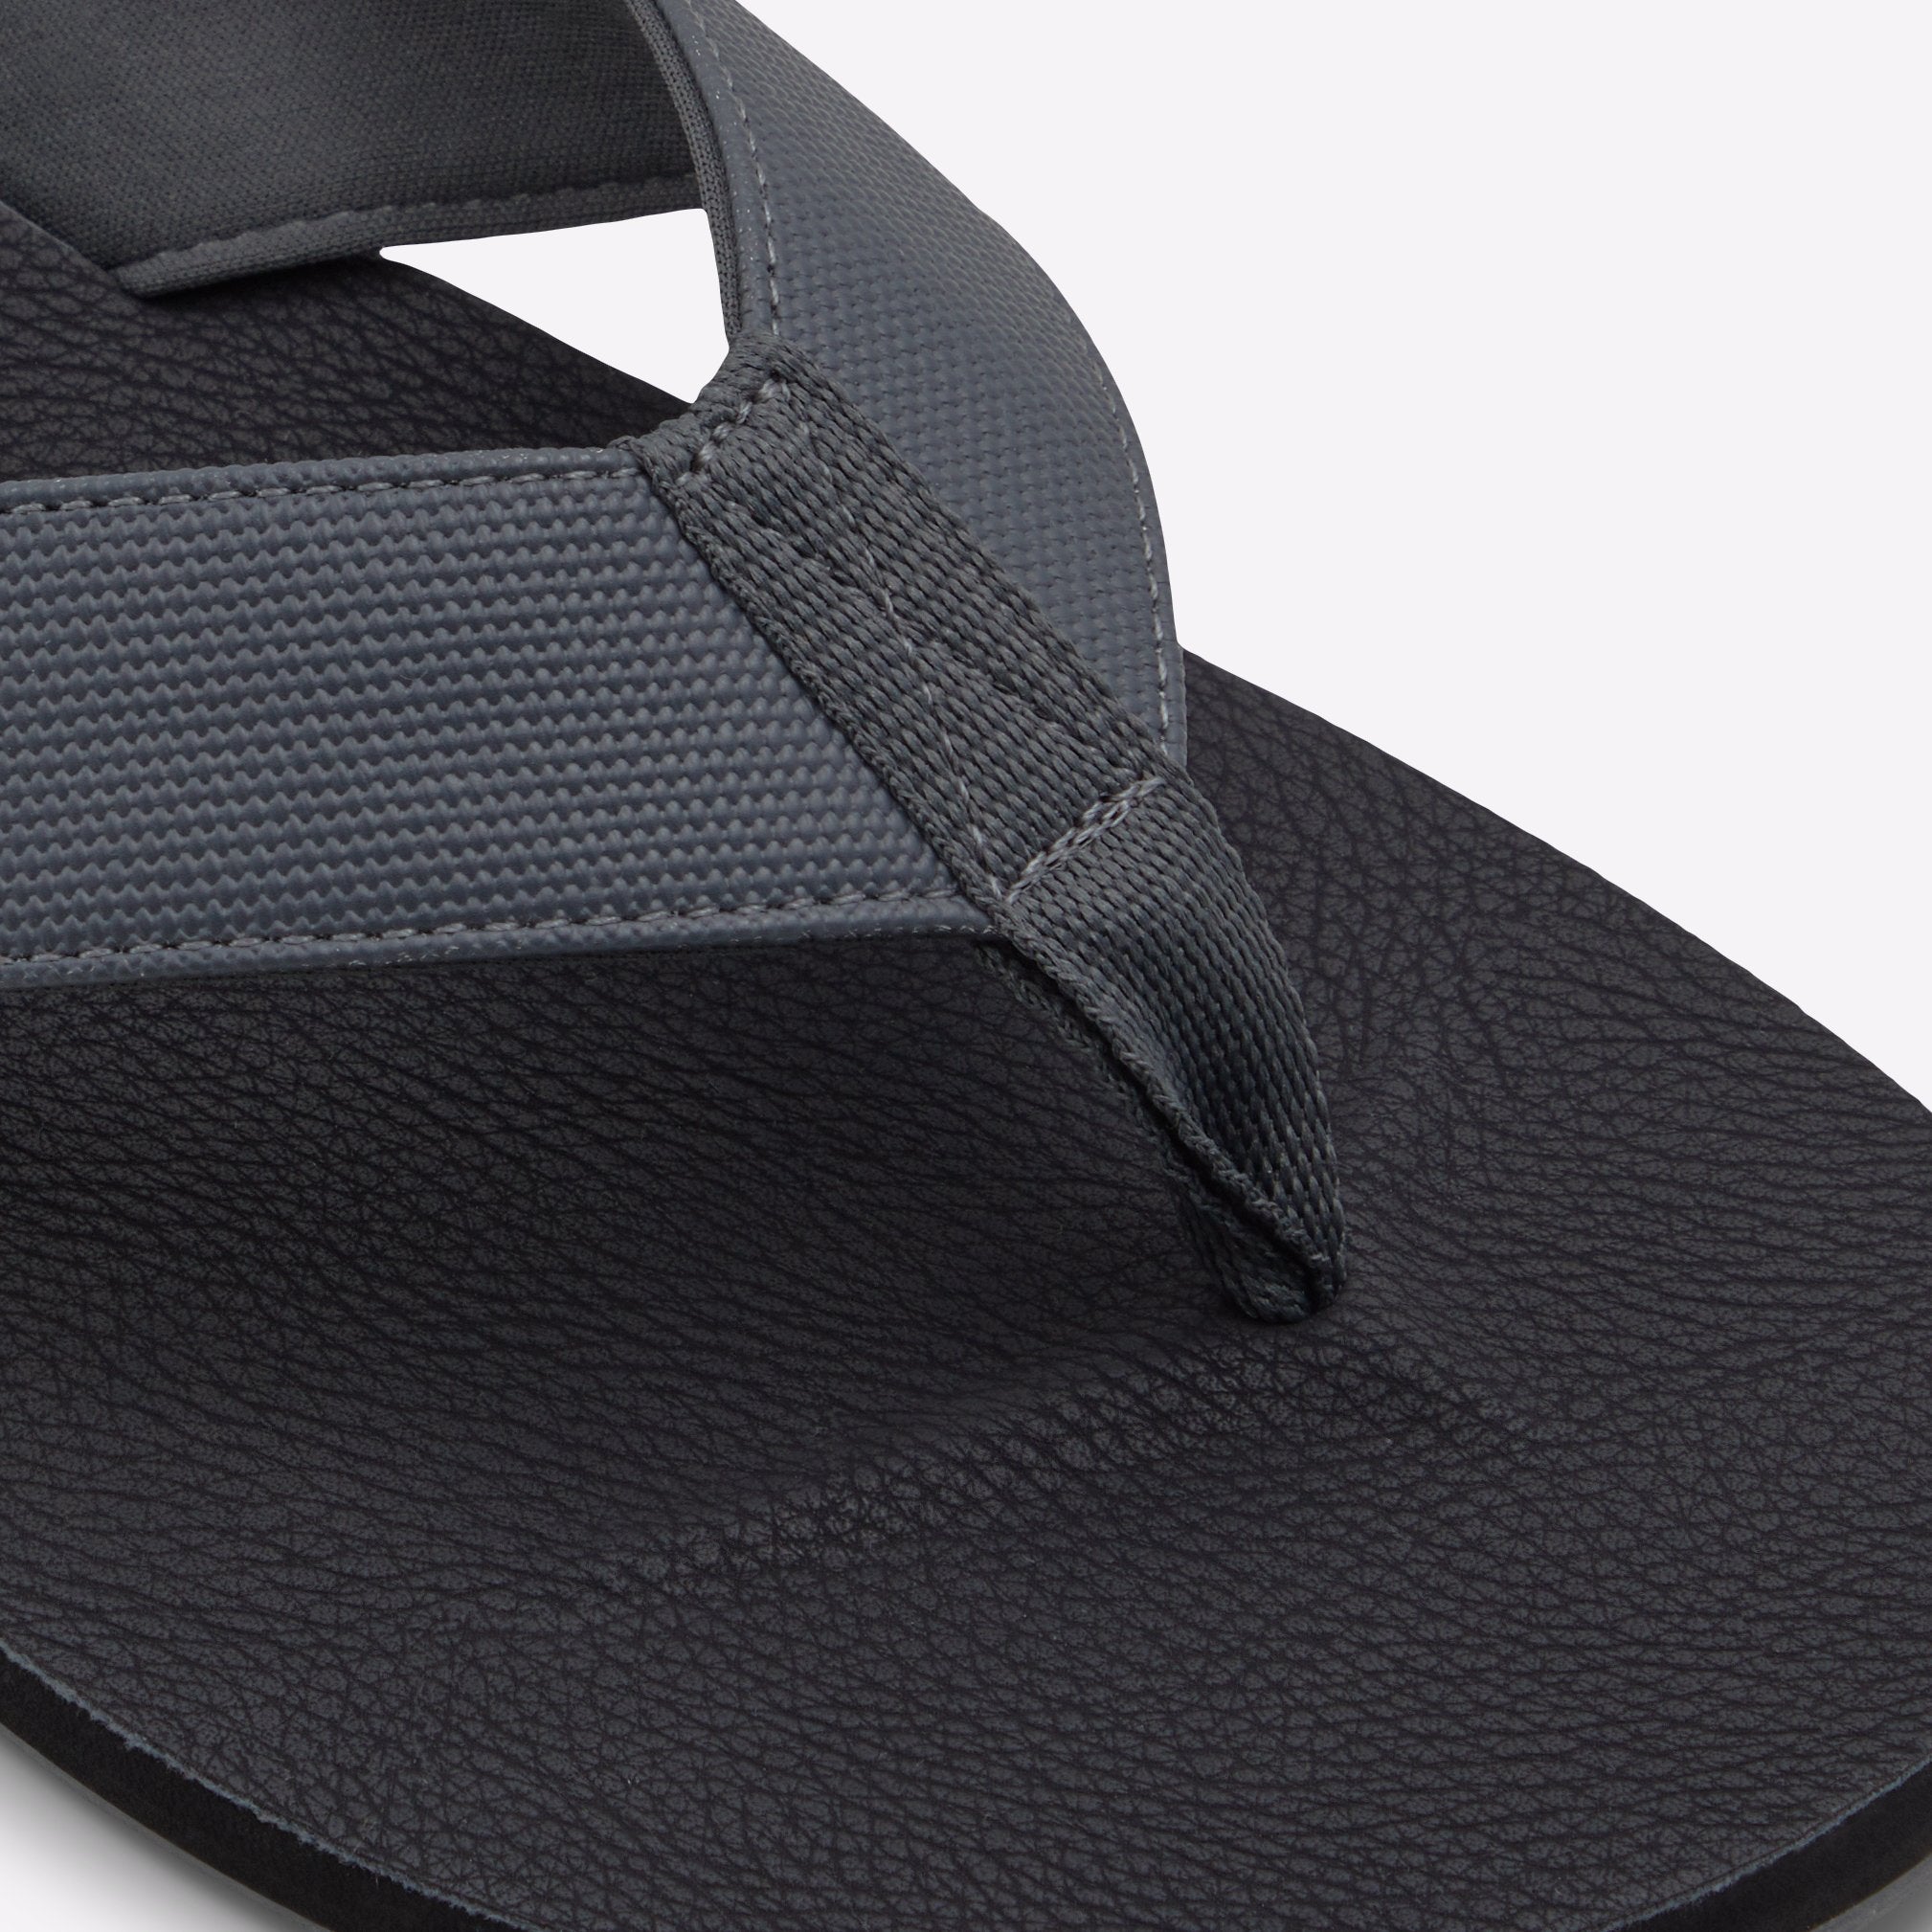 Weallere / Test / Flat Sandals Men Shoes - Dark Gray - ALDO KSA